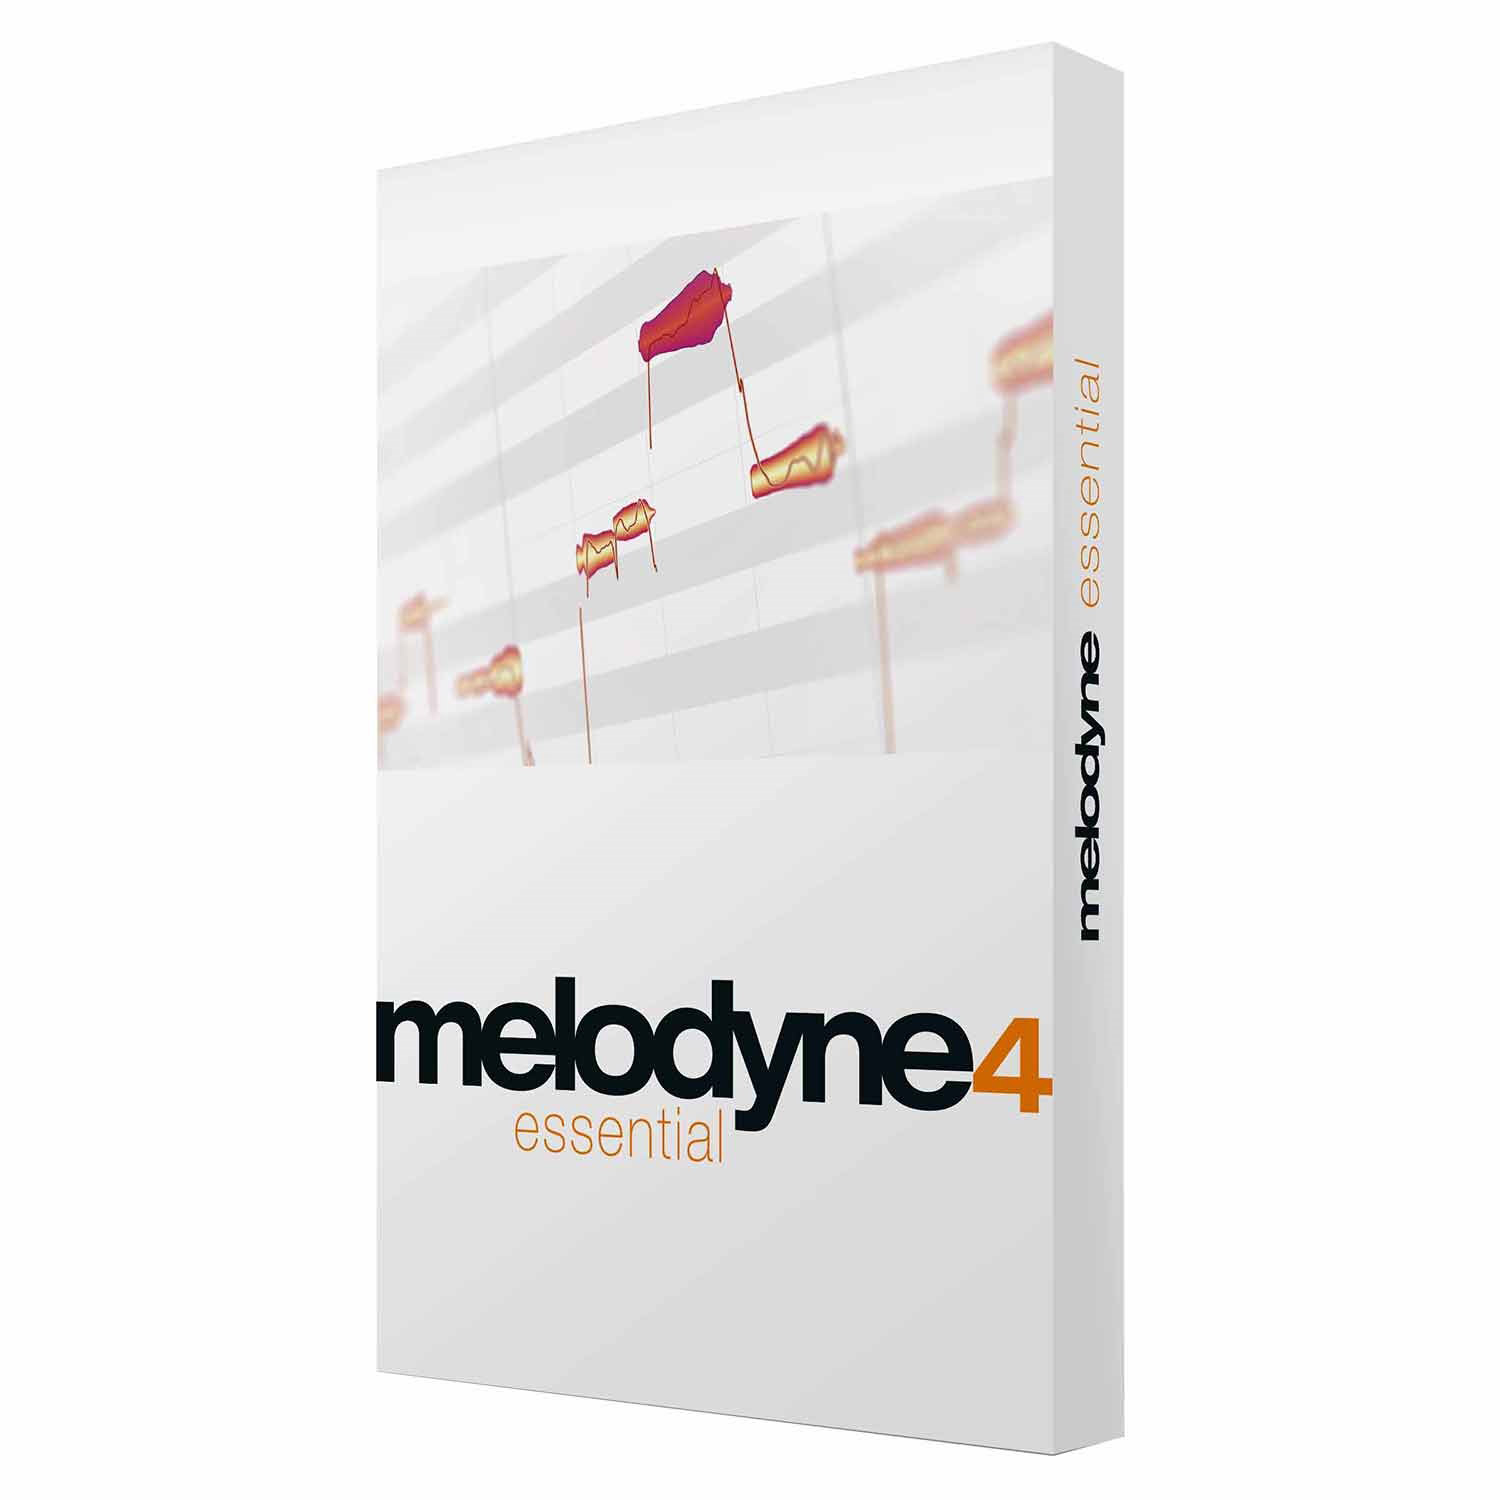 melodyne essentials